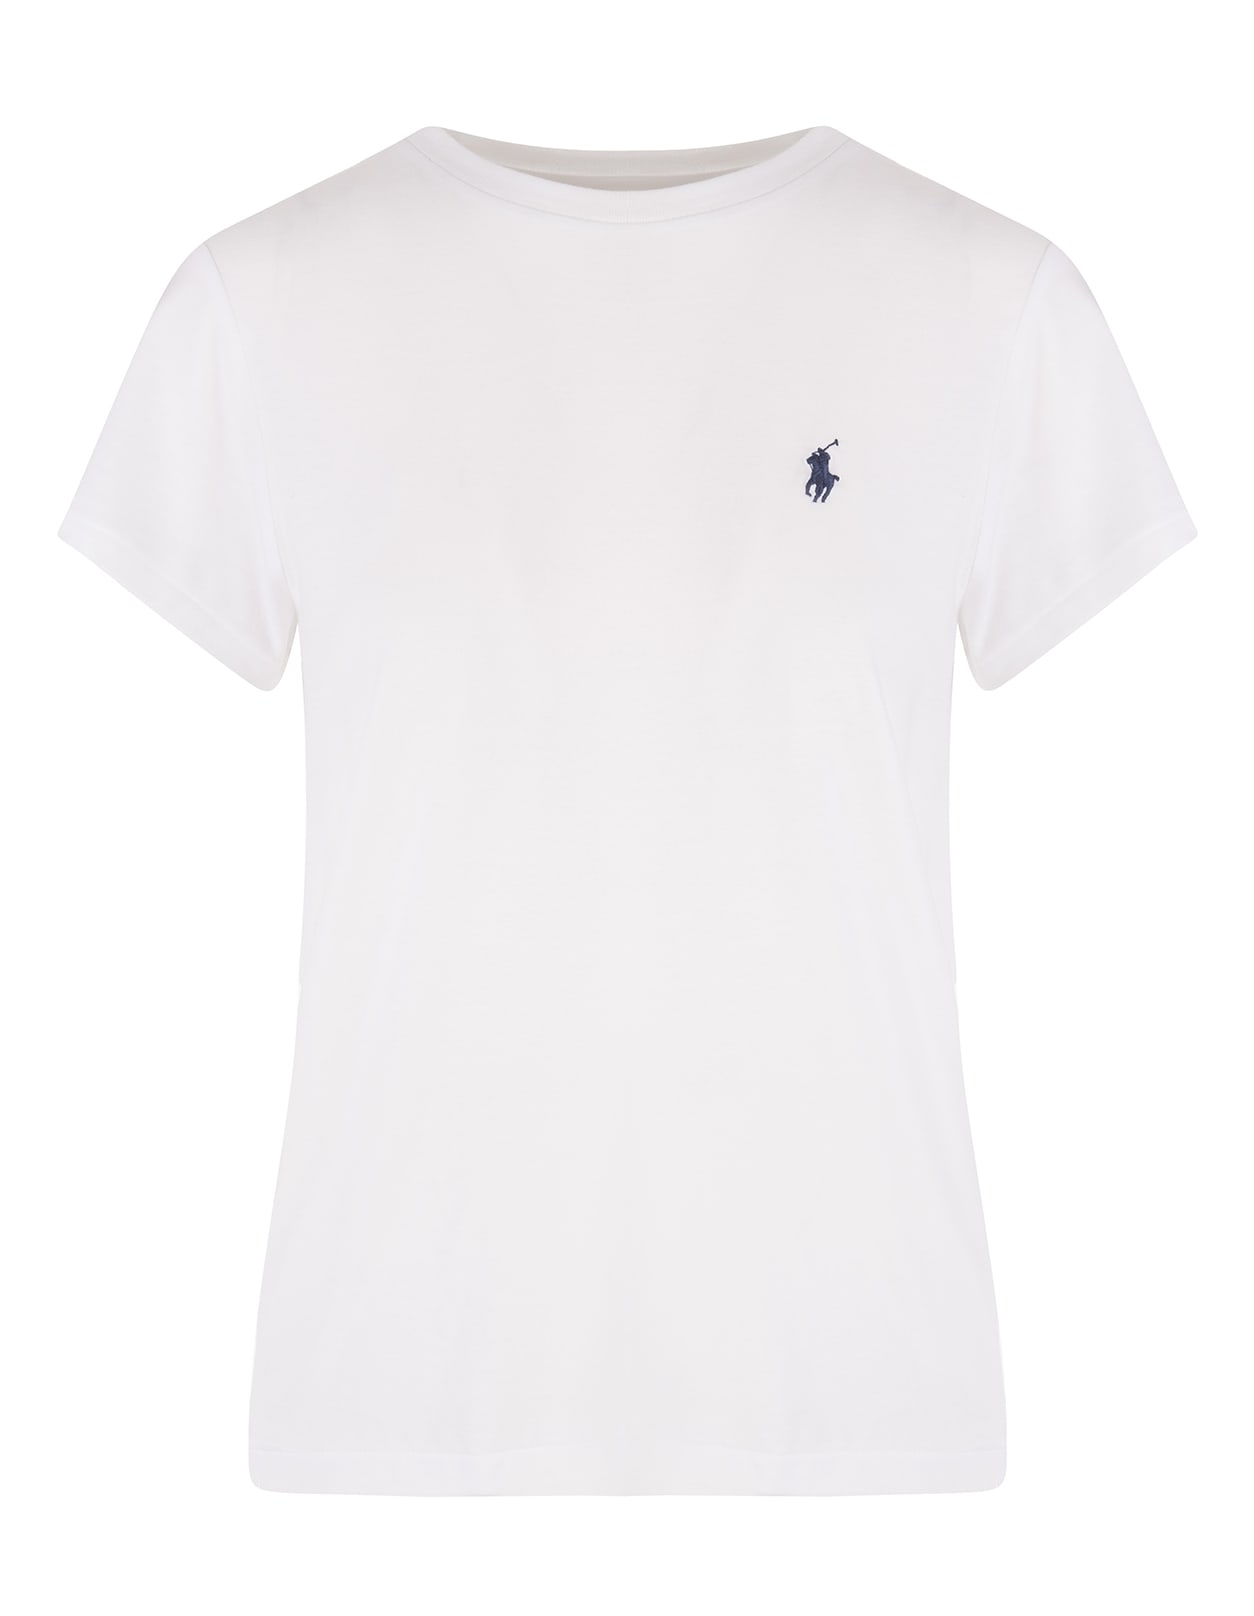 Ralph Lauren Woman Basic White T-shirt With Blue Pony